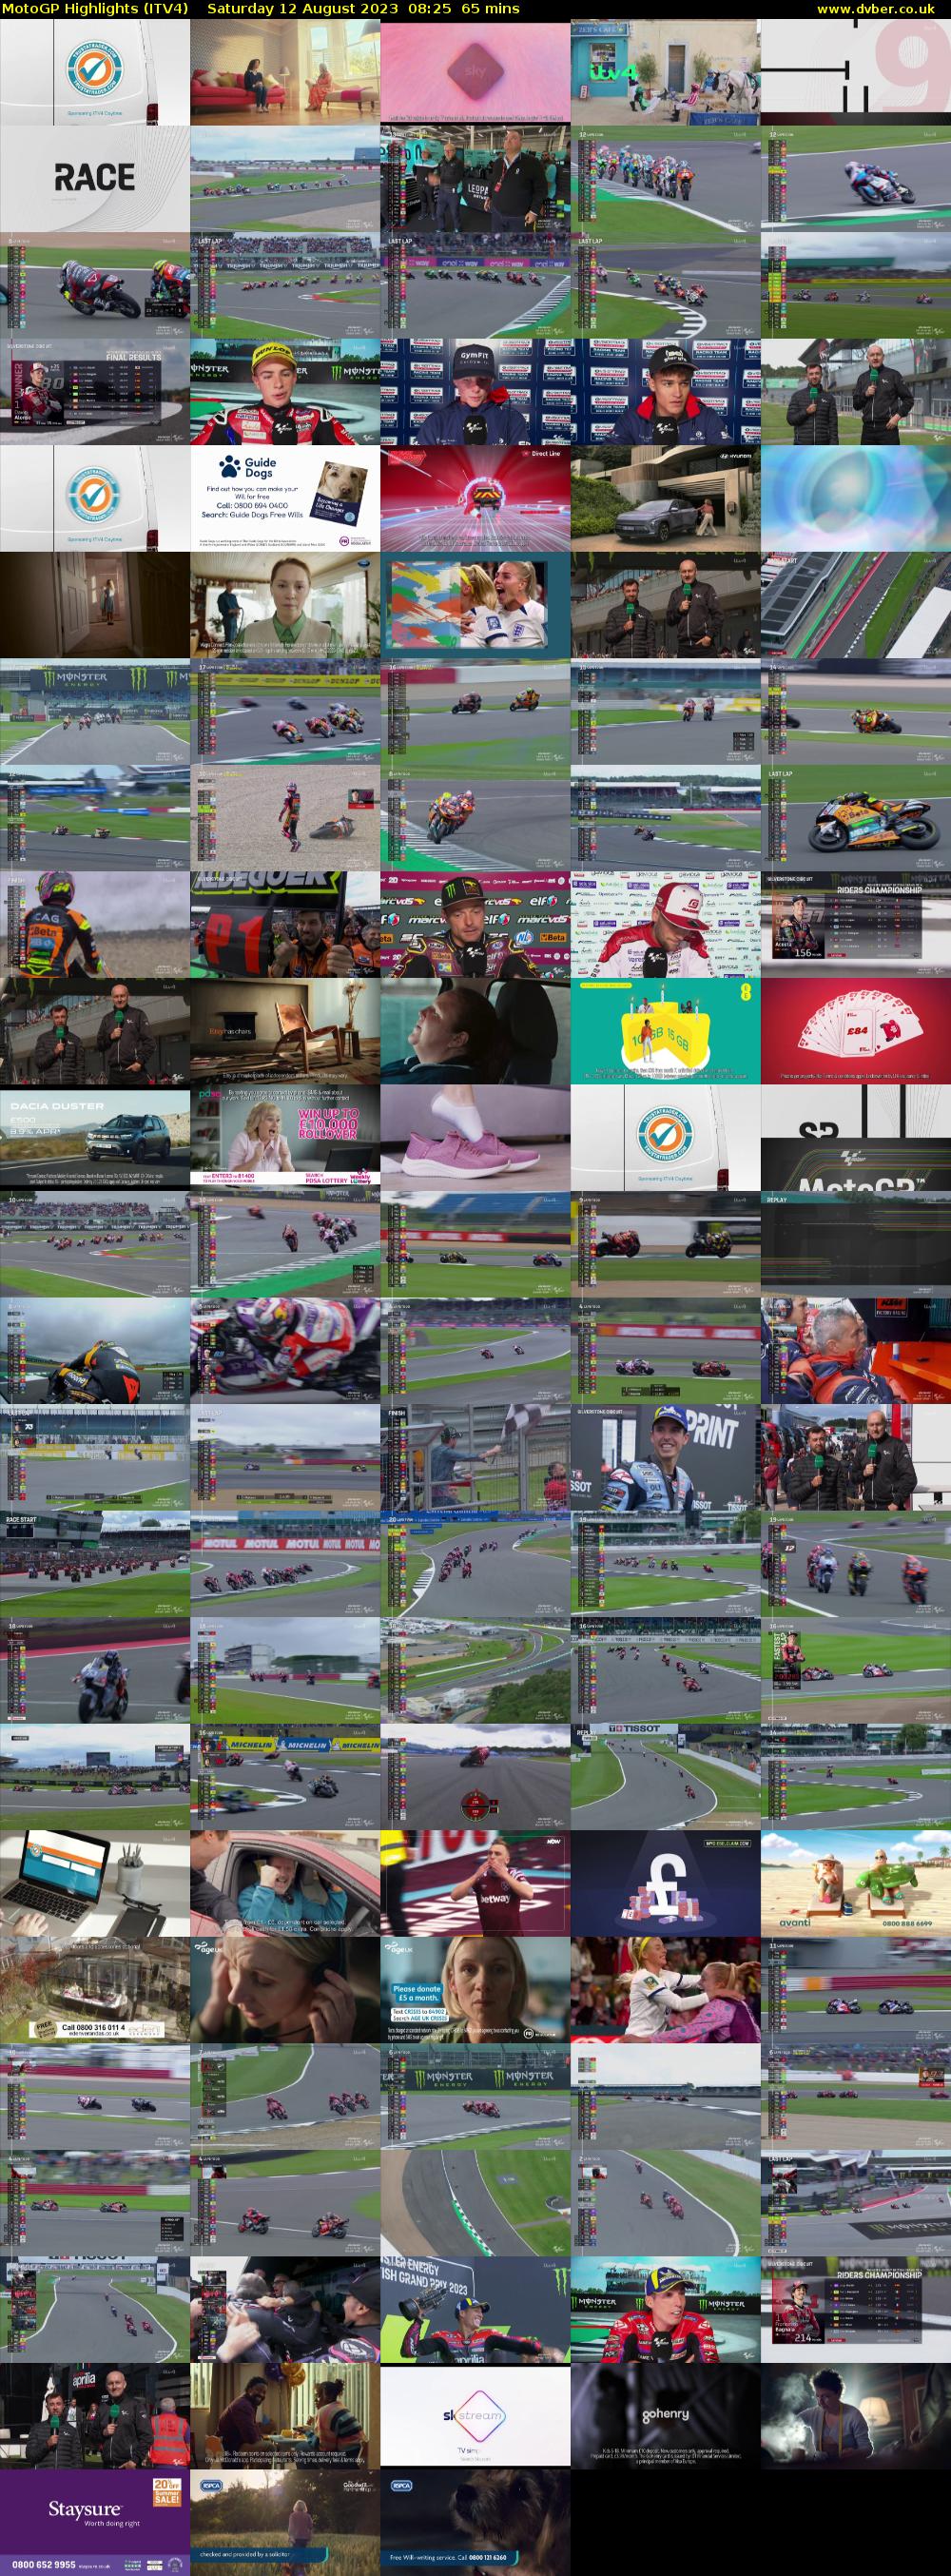 MotoGP Highlights (ITV4) Saturday 12 August 2023 08:25 - 09:30